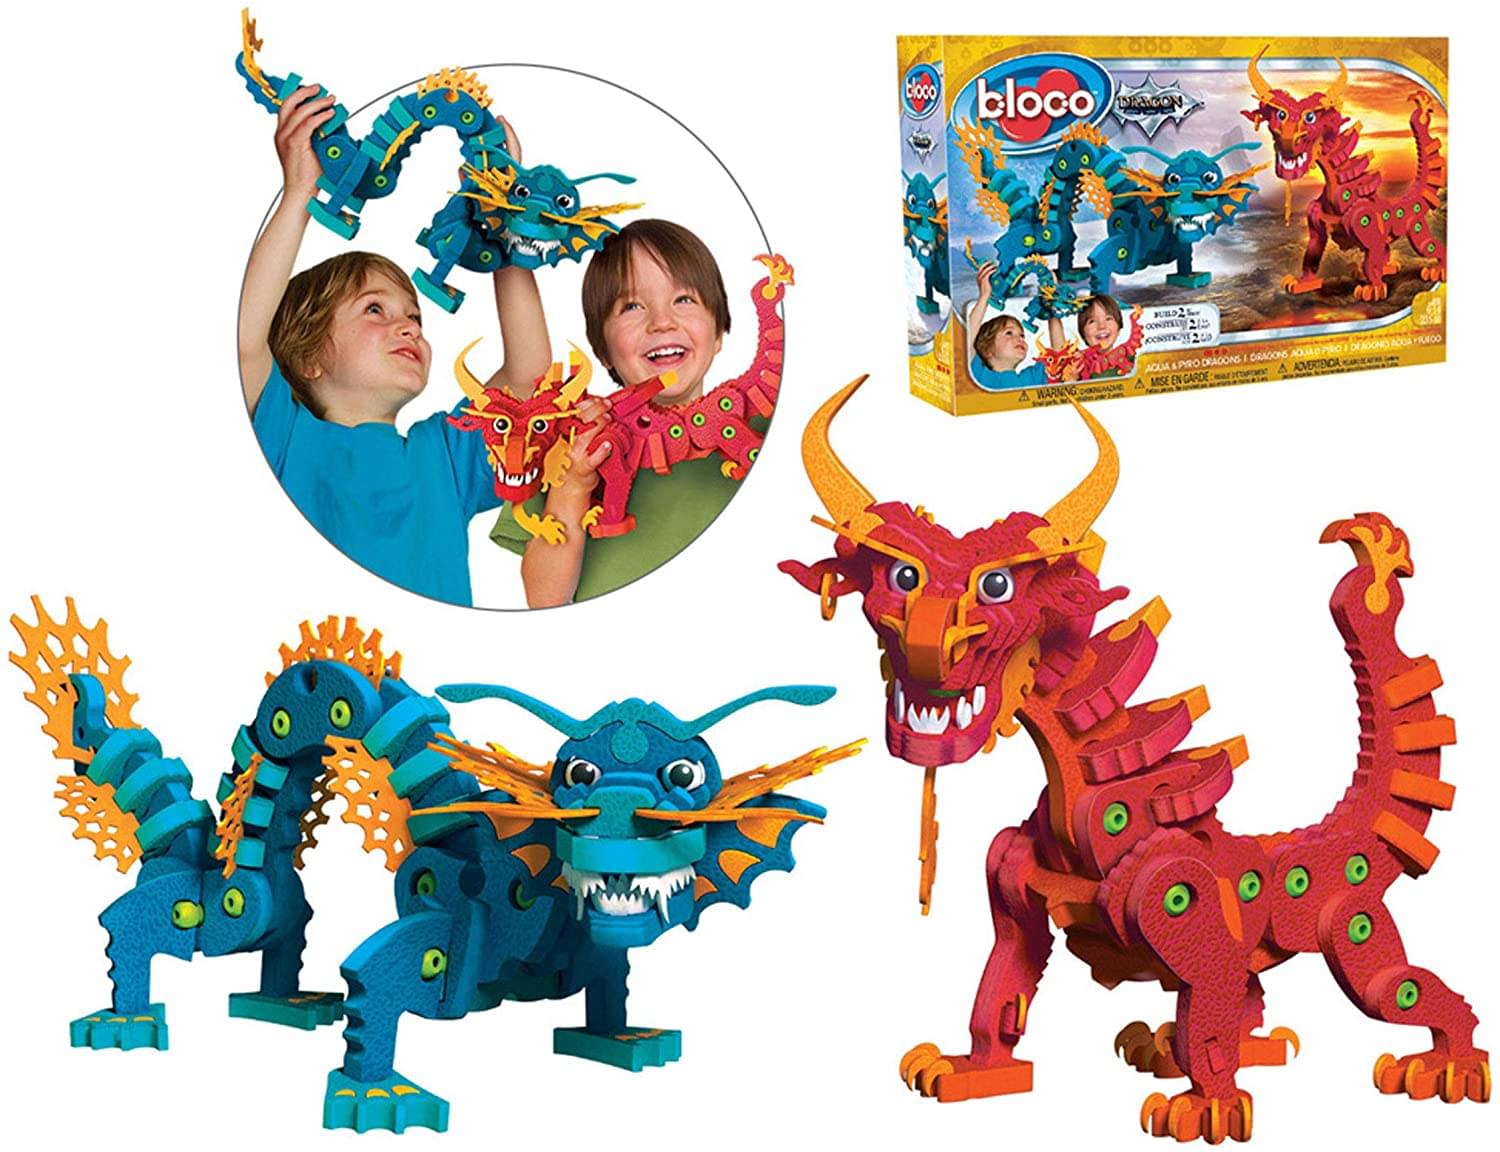 Bloco 235 Piece Construction Set | Aqua & Pyro Dragons